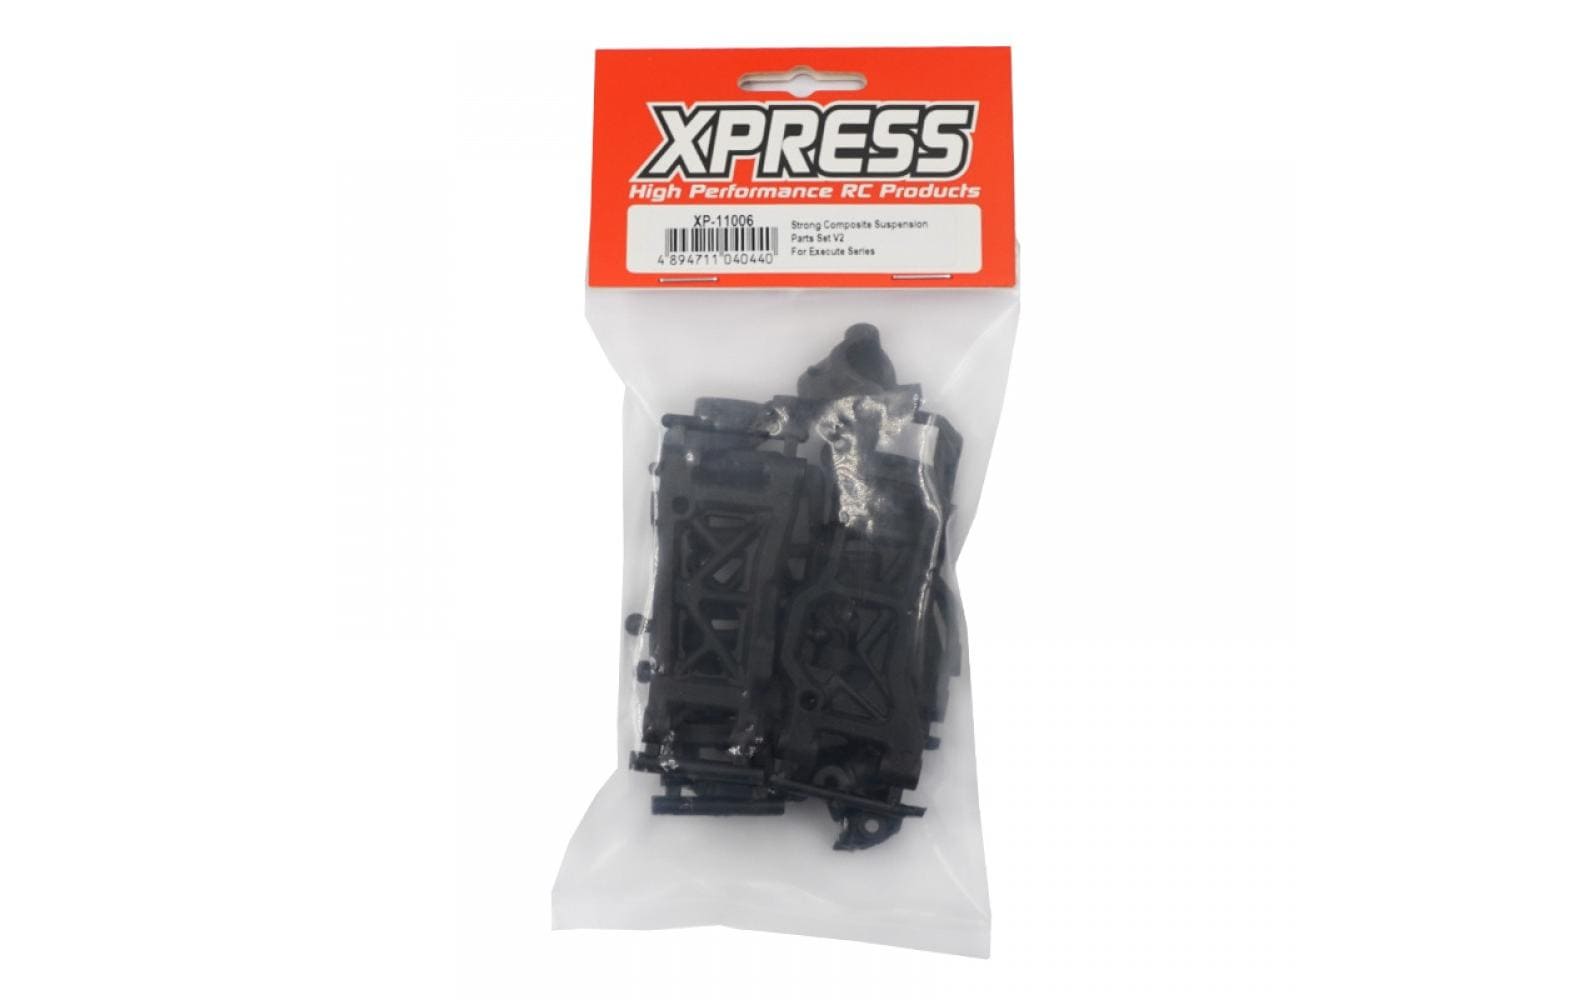 Xpress Aufhängungs-Teile Set V2, Composite, für Execute Serie